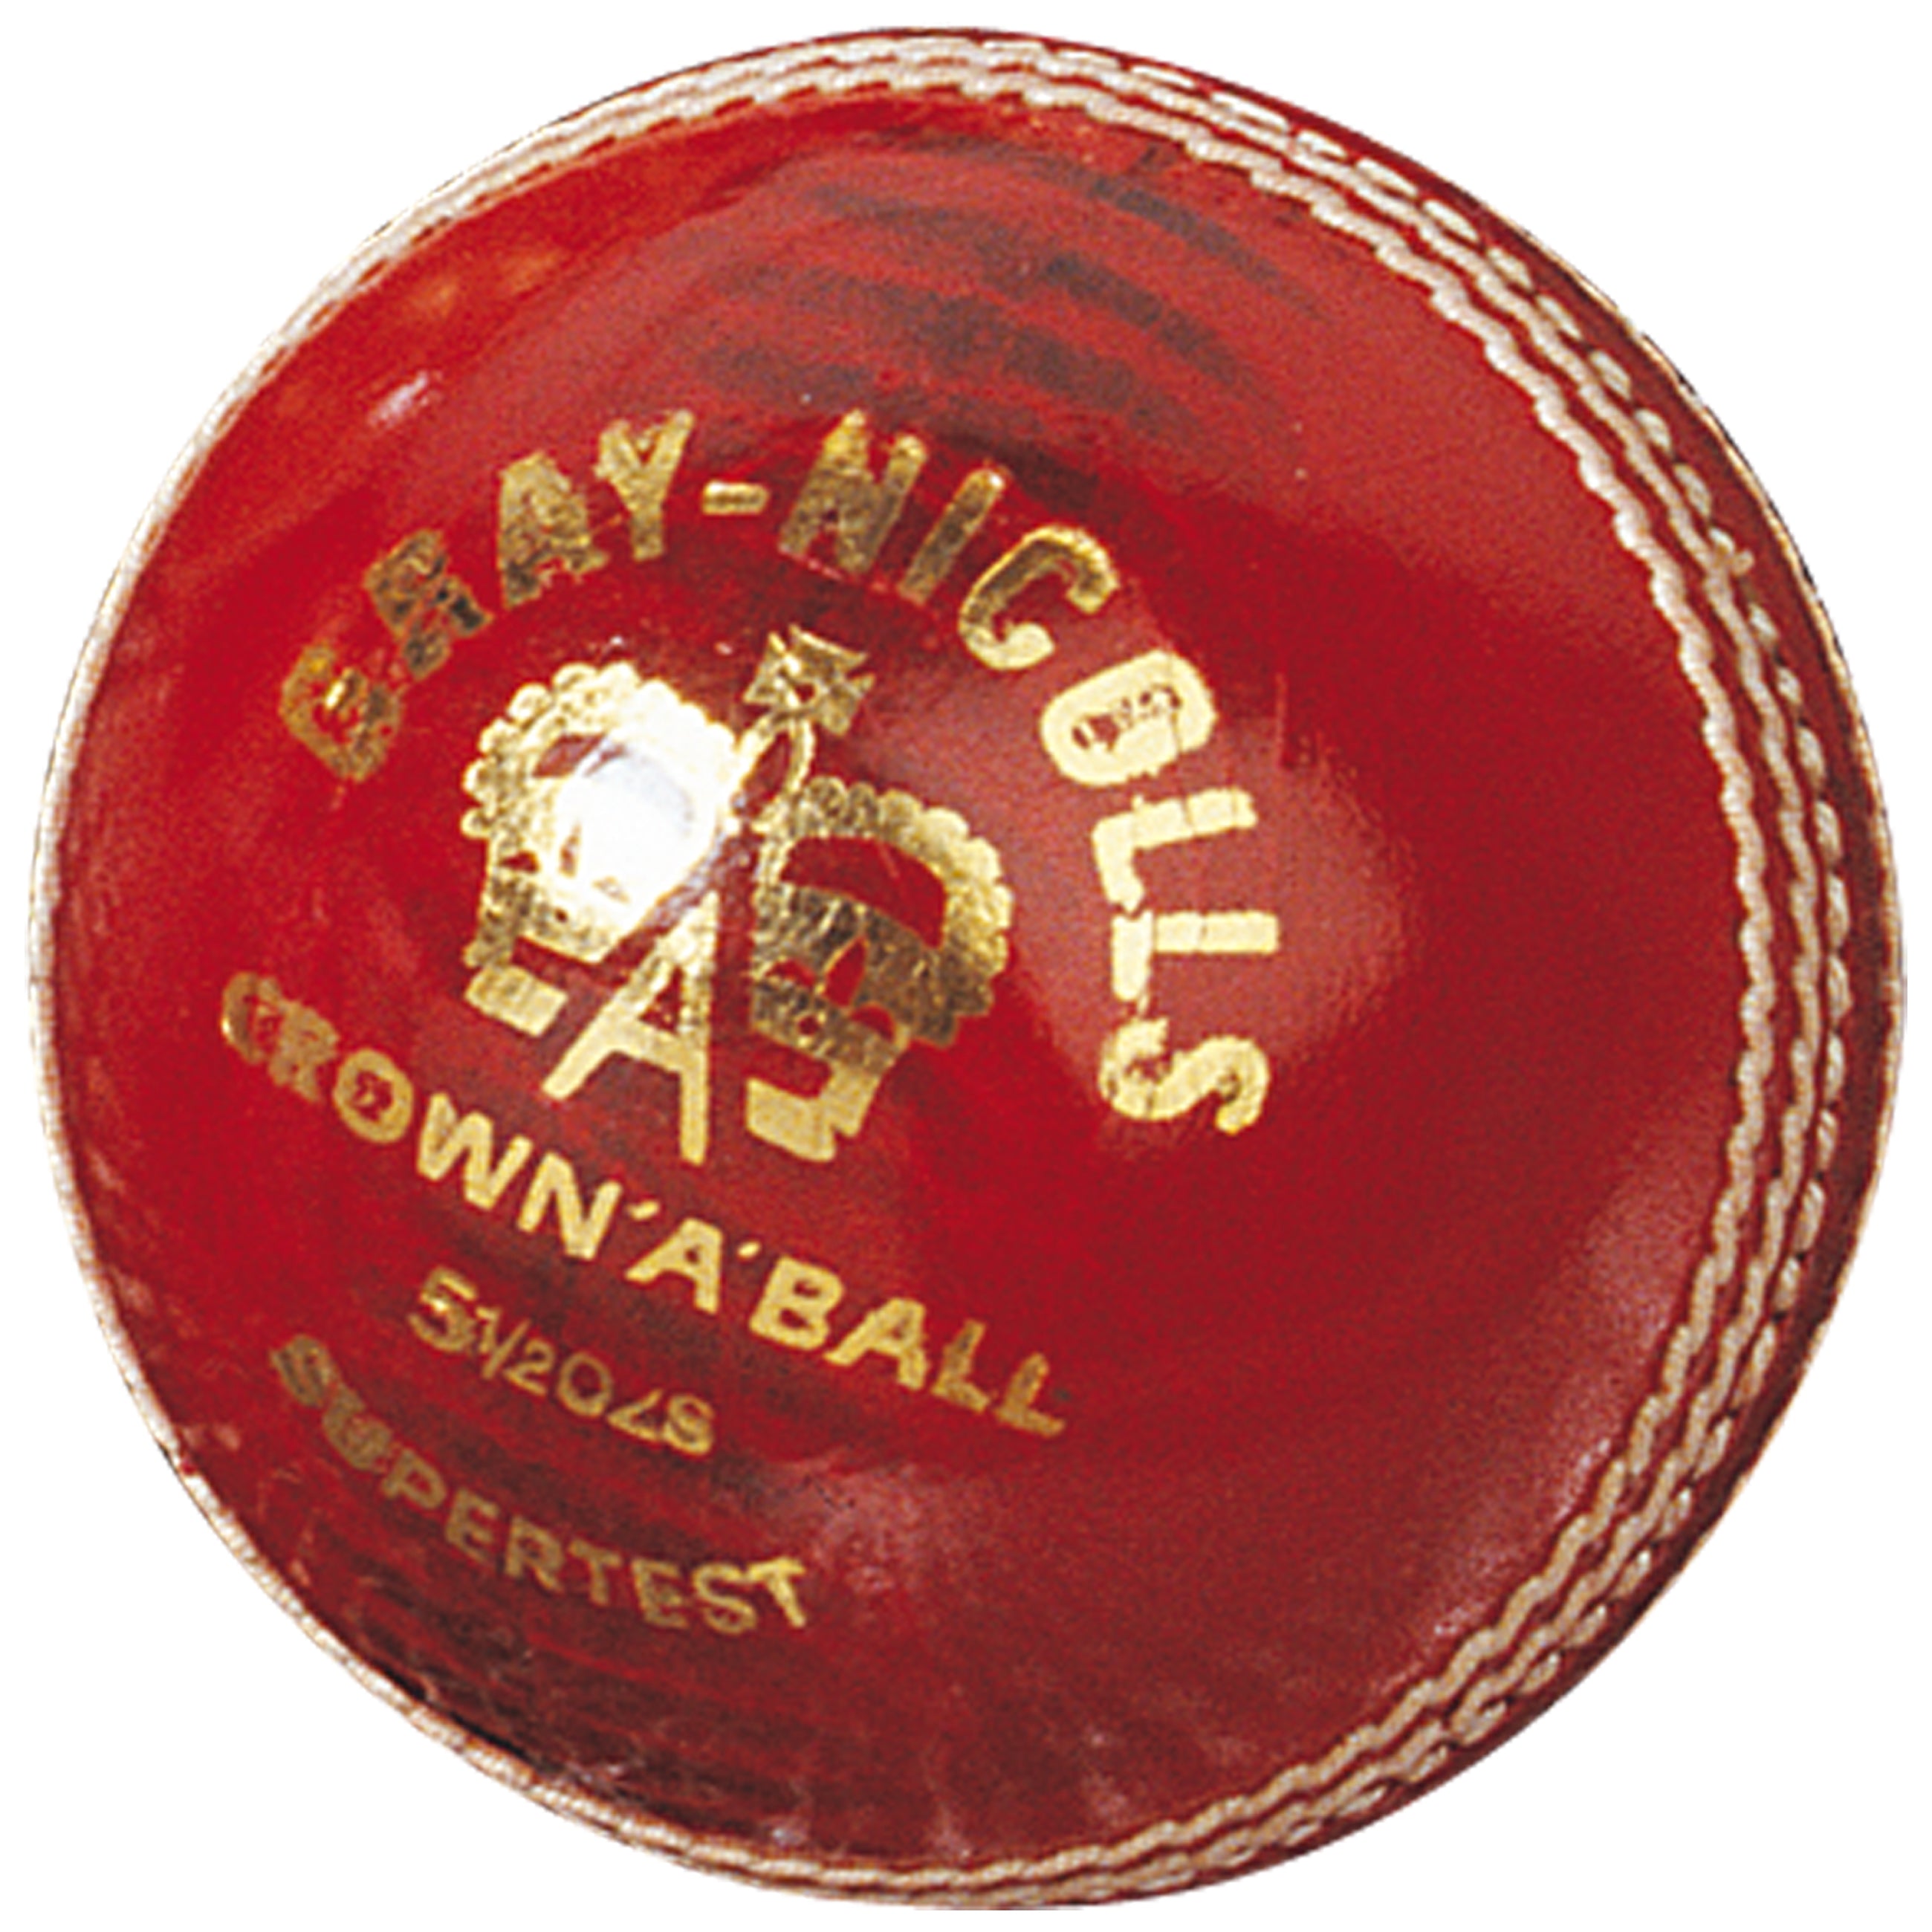 SuperTest Cricket Ball